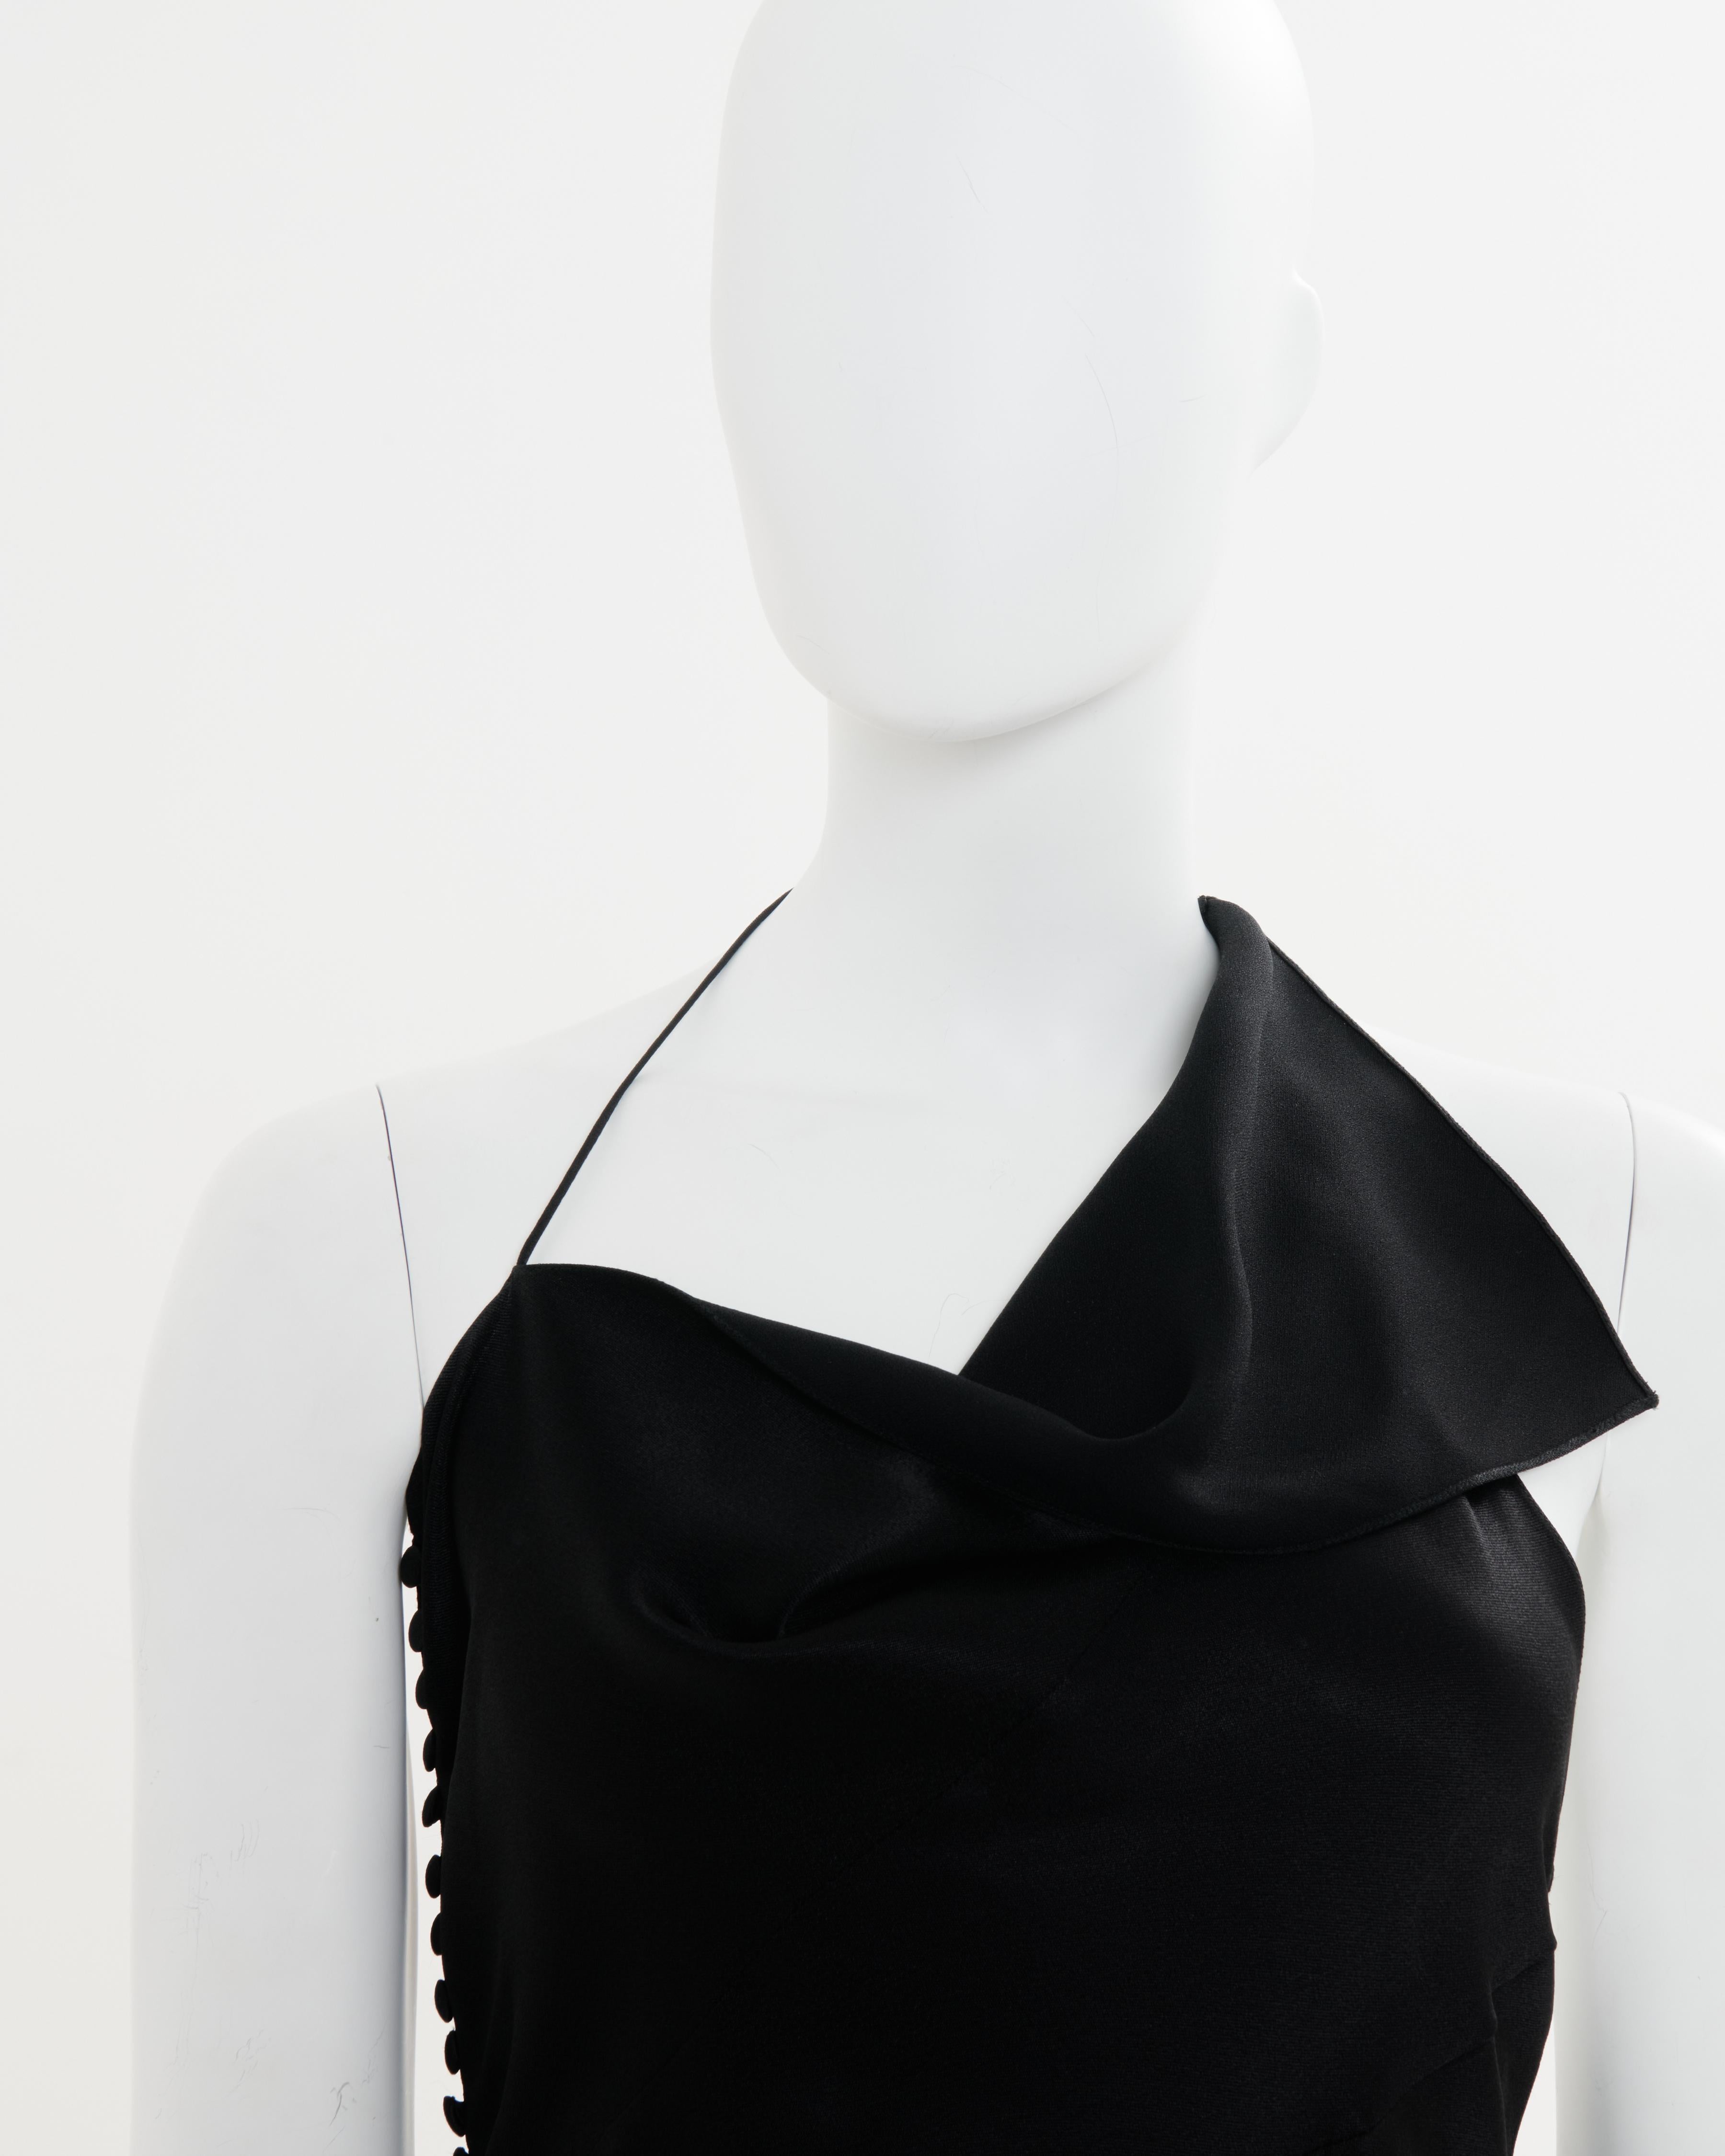 Christian Dior by John Galliano F/W 2000 Black bias-cut trained evening dress For Sale 1